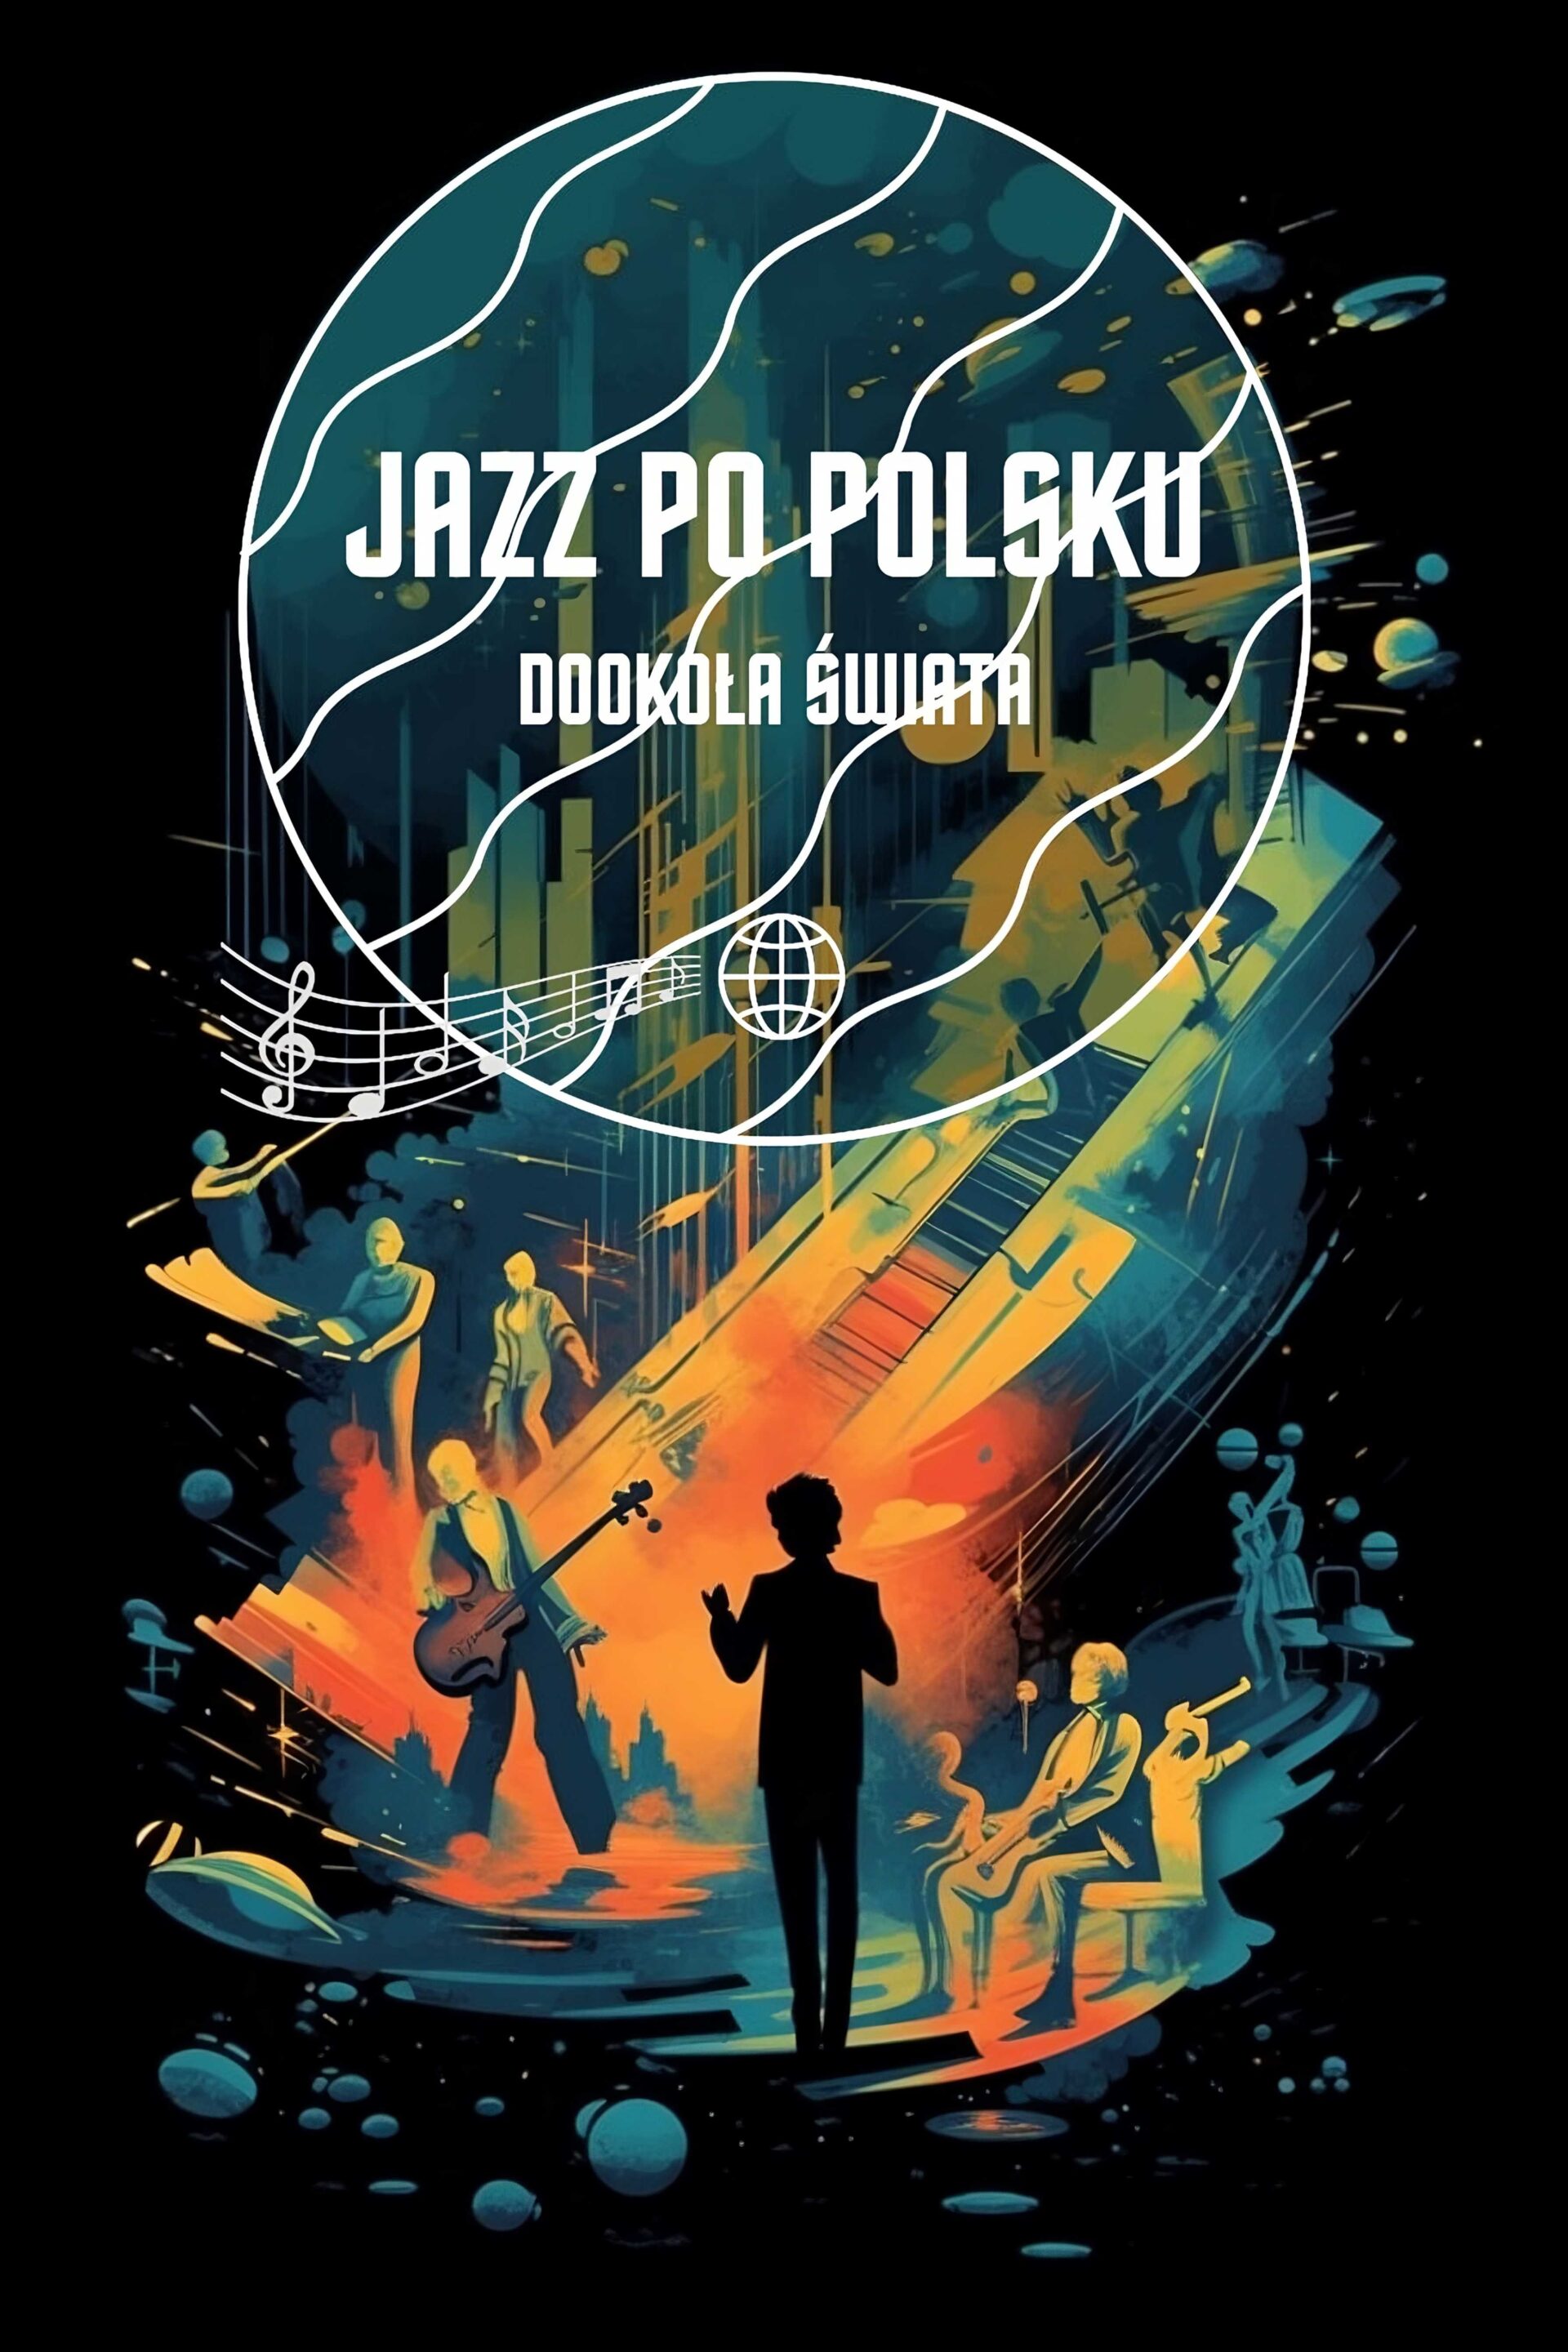 Polish Jazz Takes Center Stage in China: JAZZ PO POLSKU "Around the World" Tour Returns